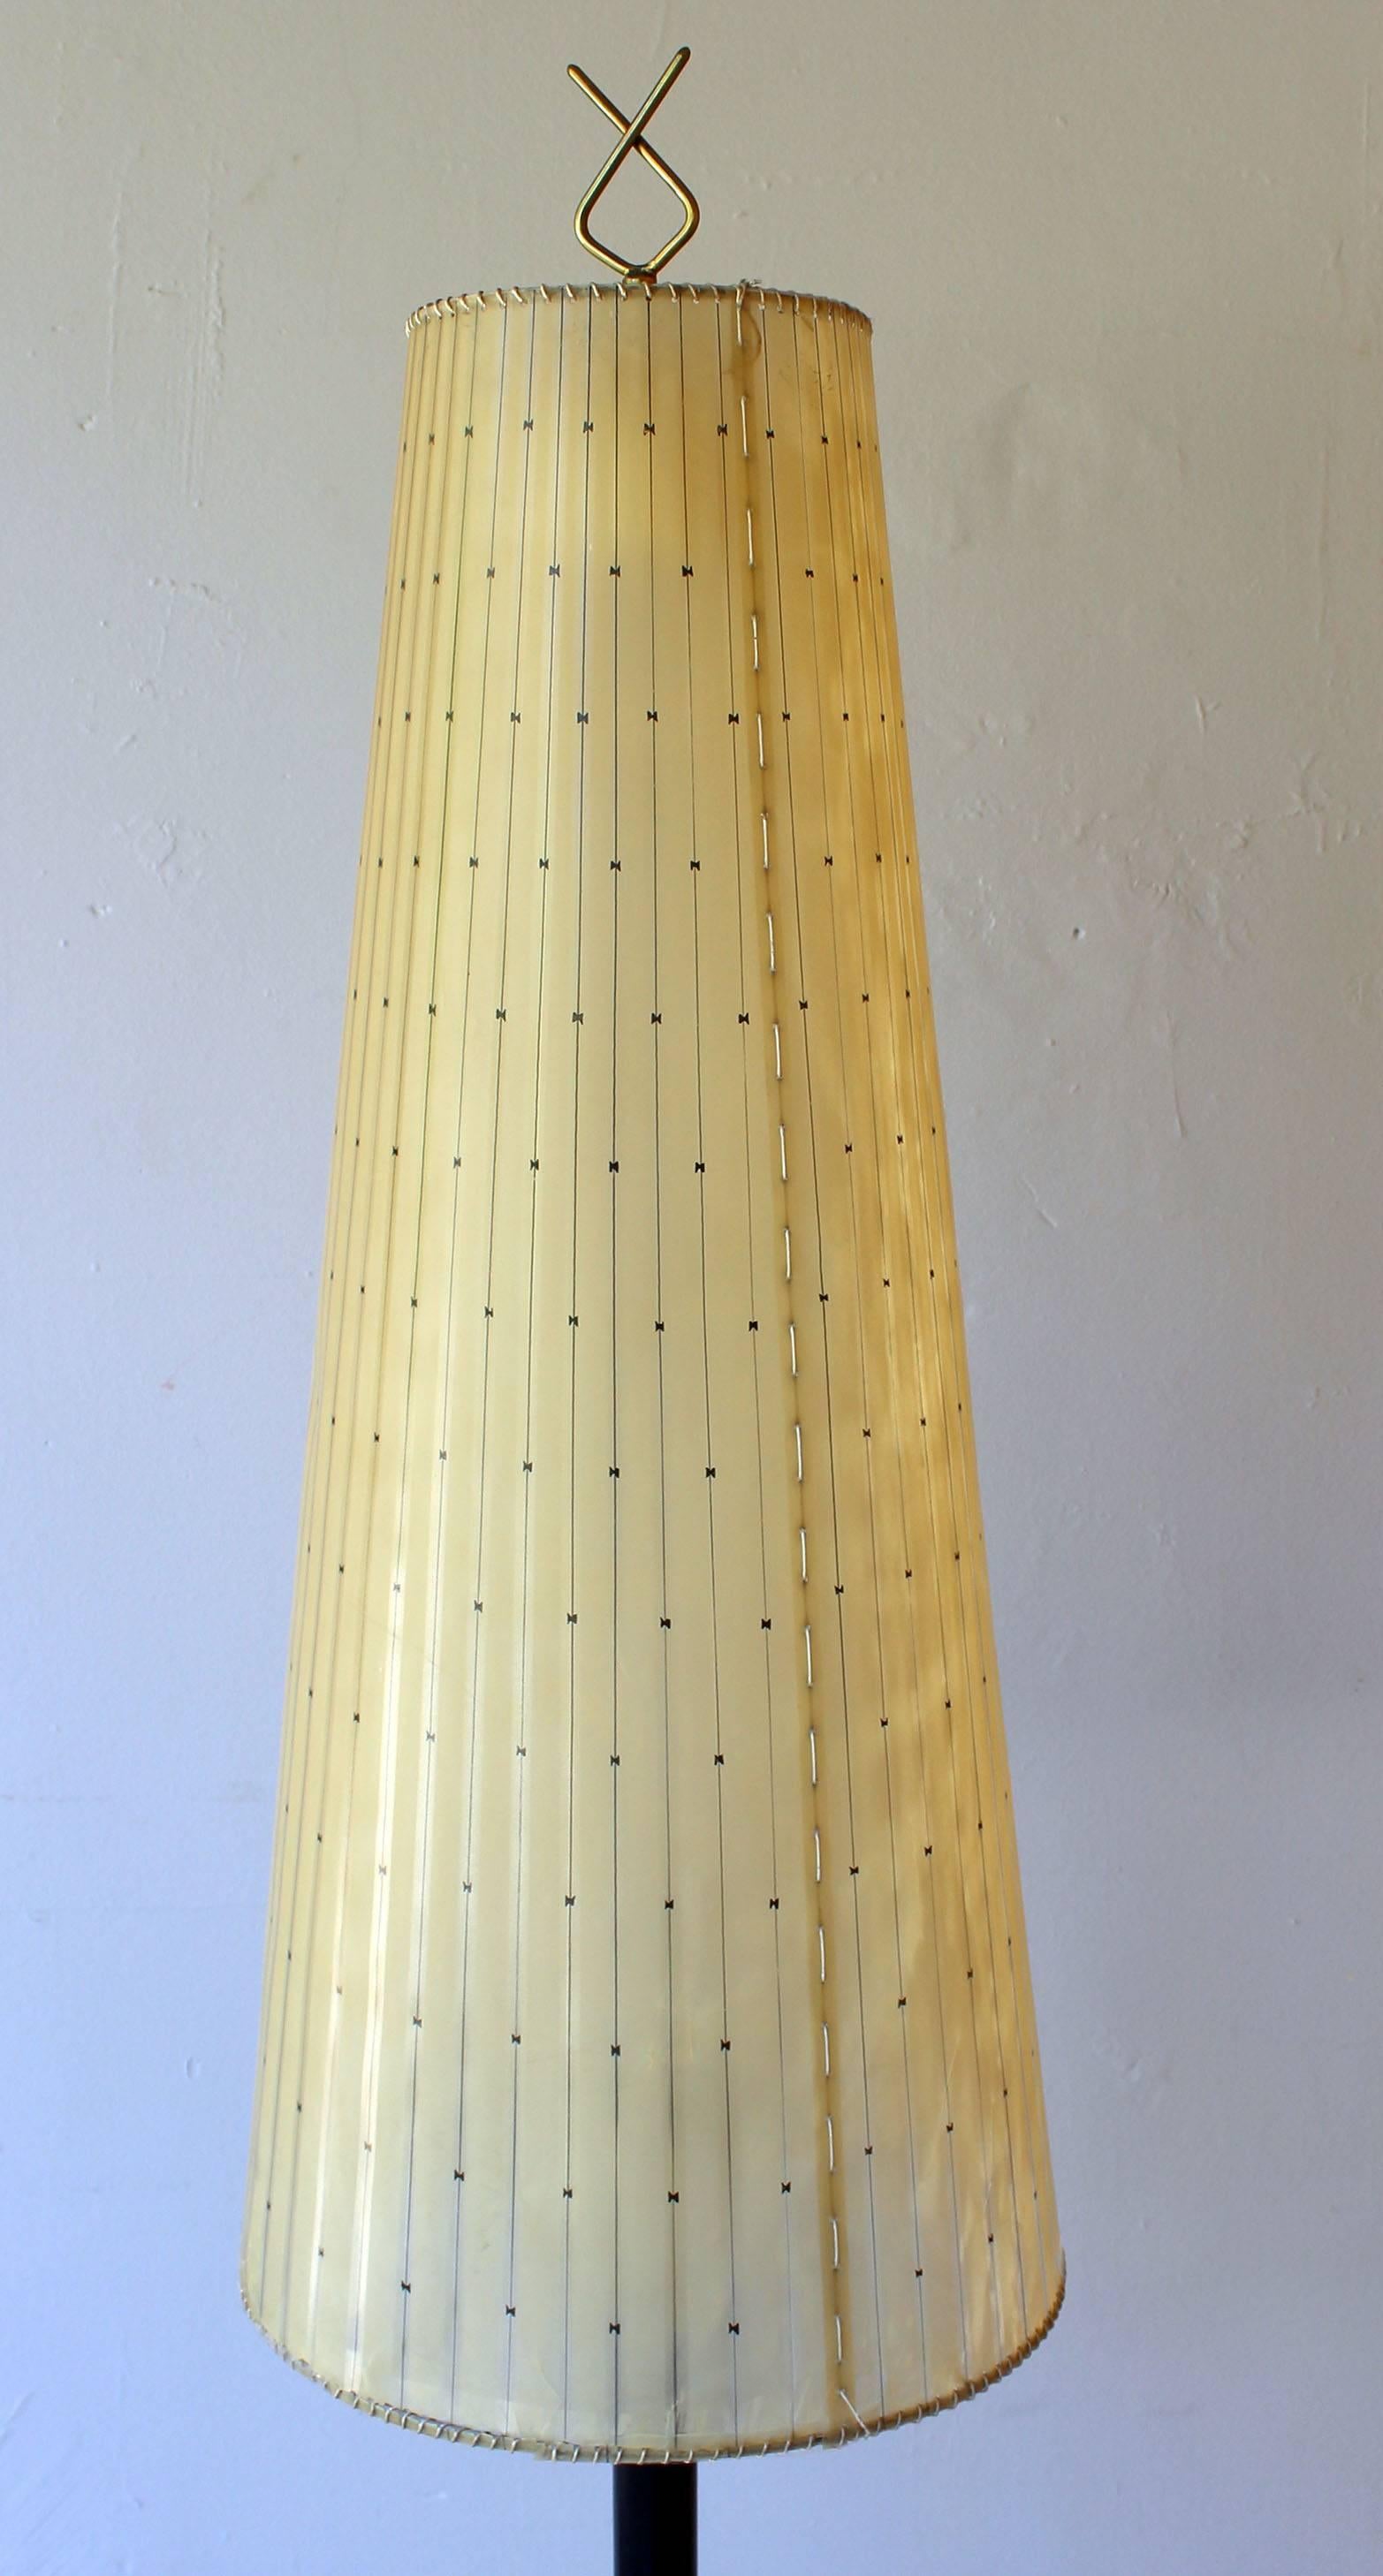 Early Italian Tripod Floor Lamp For Sale 1